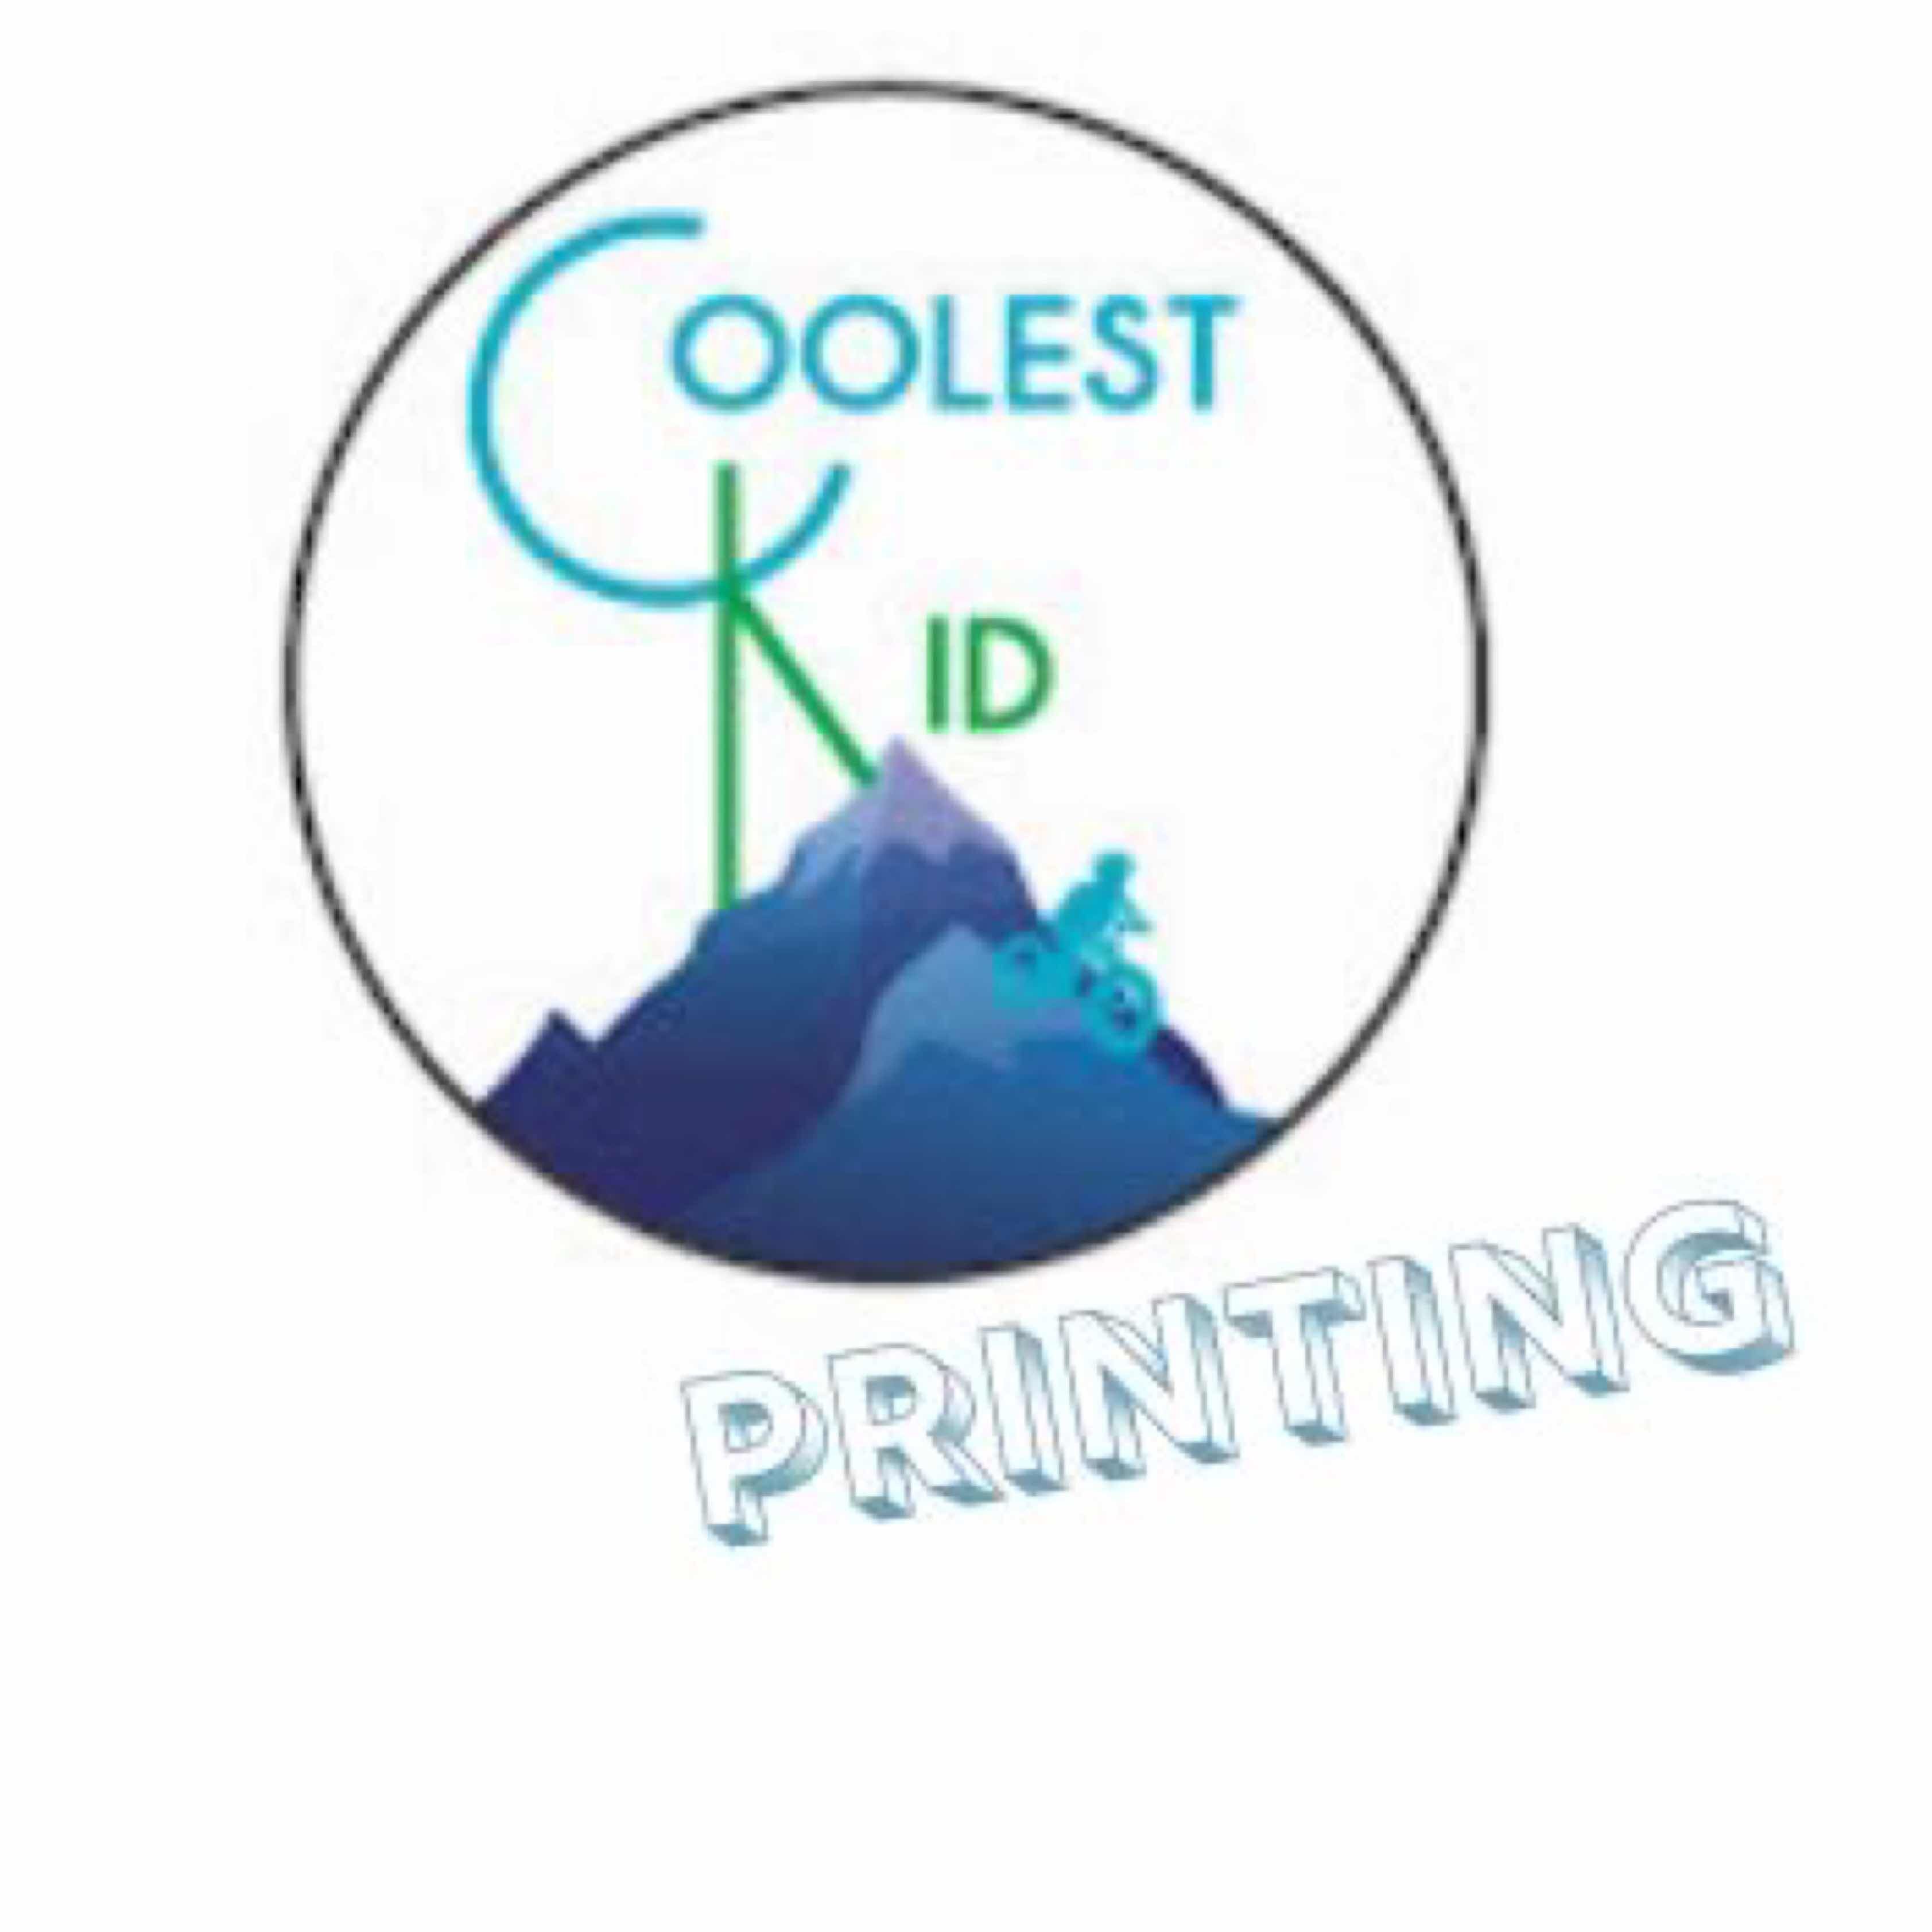 Coolestkidprinting